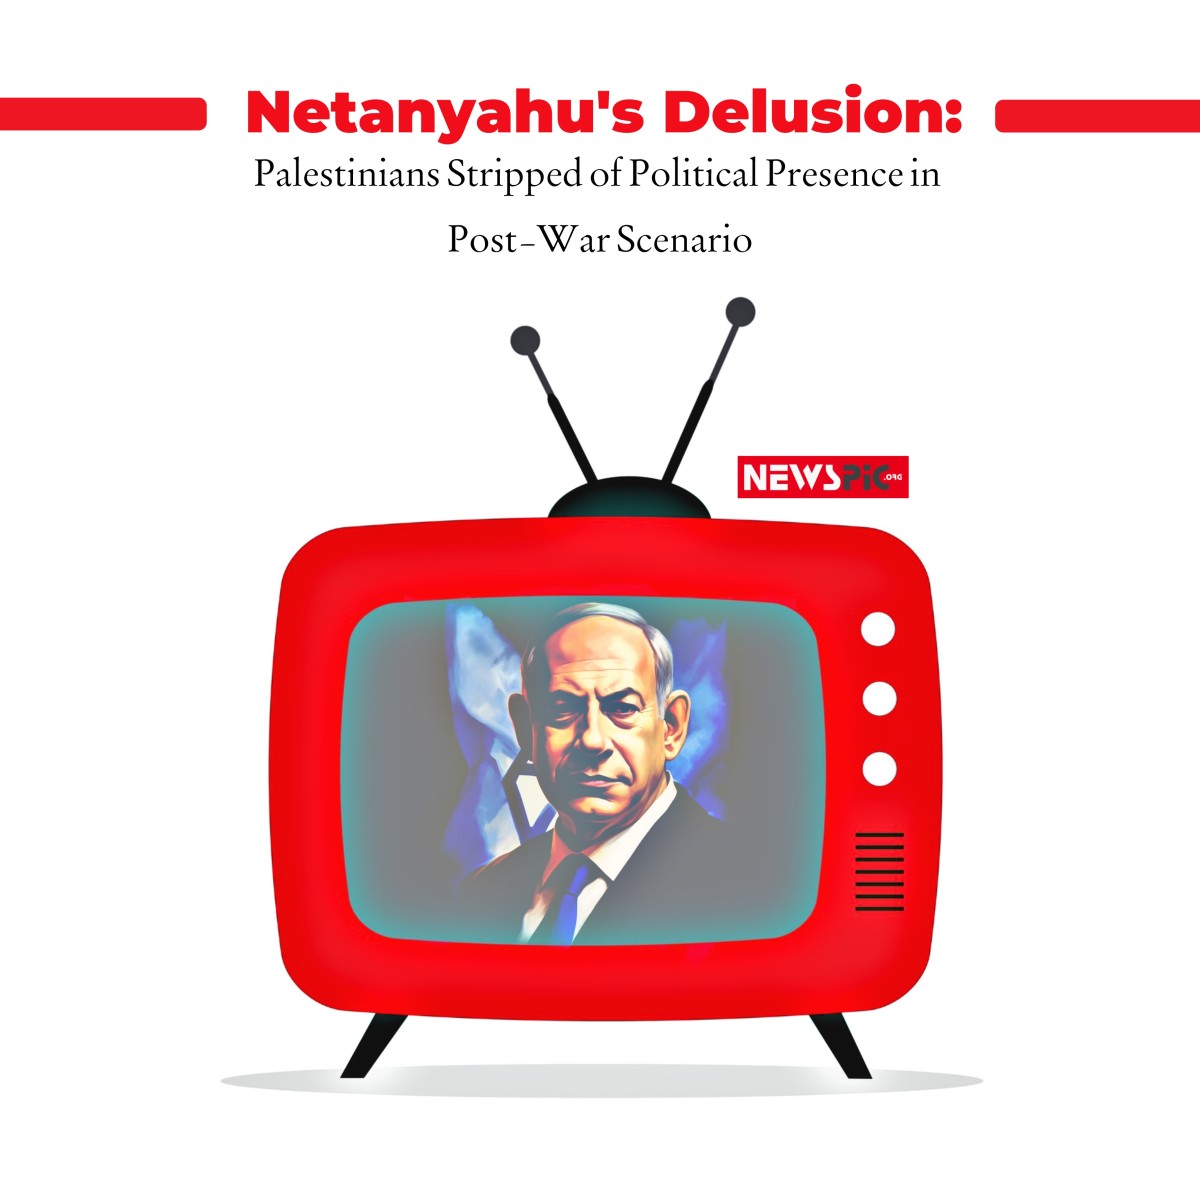 Netanyahu's Delusion